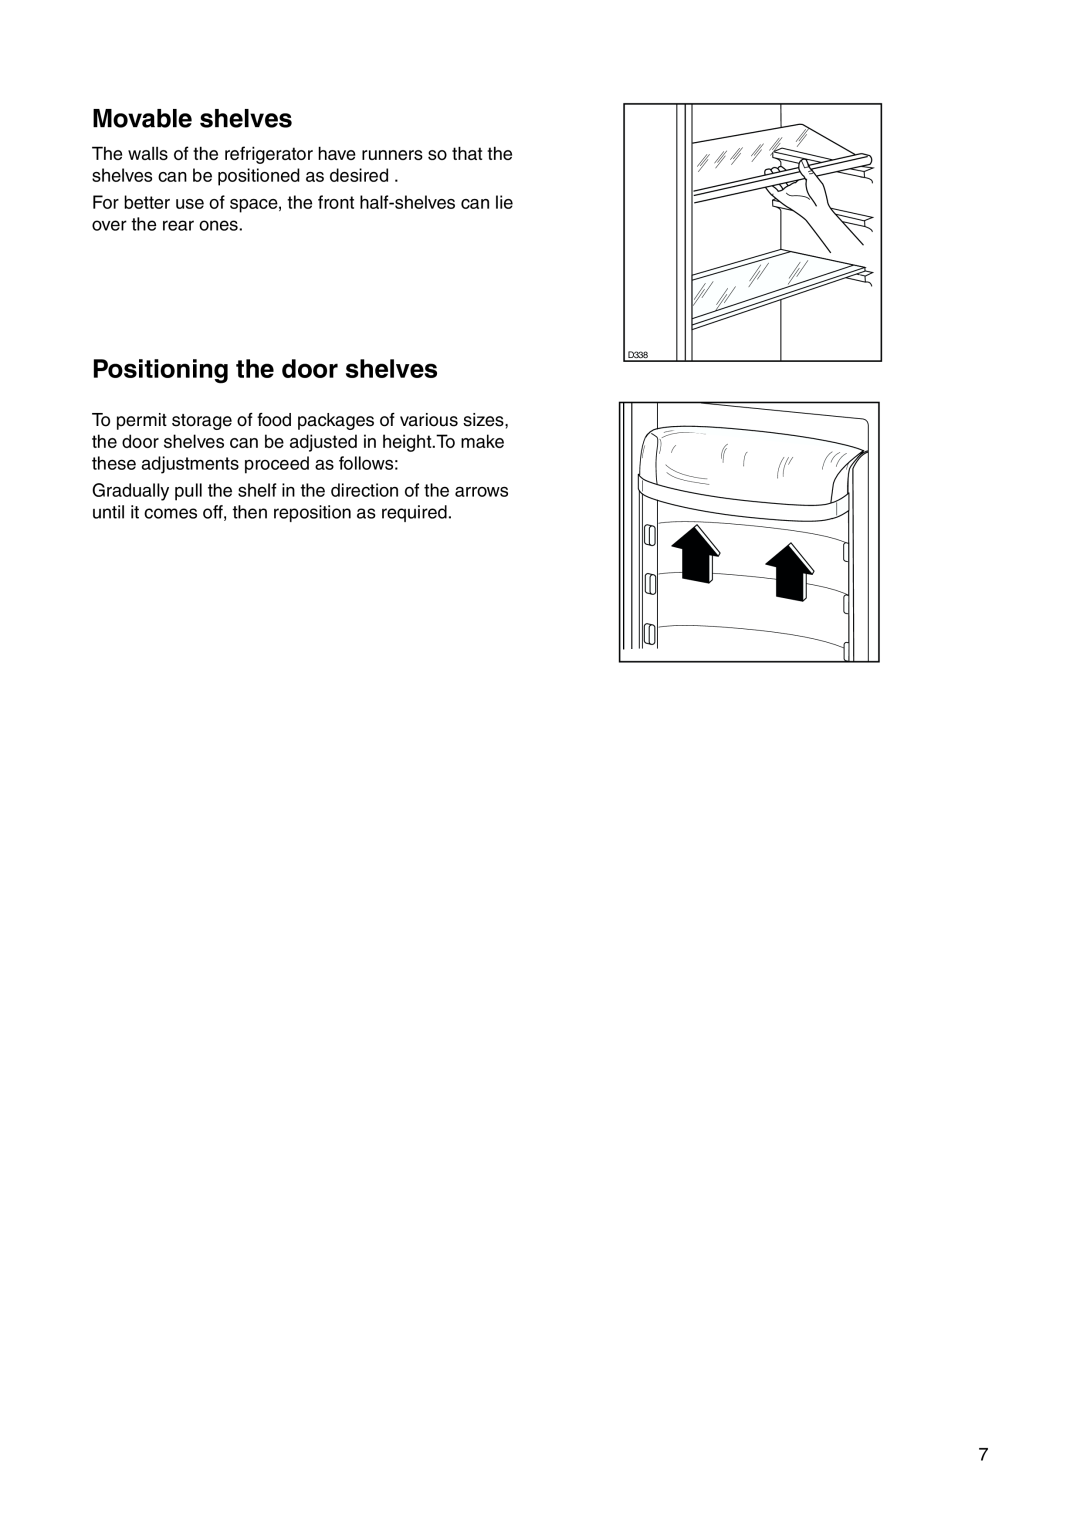 Electrolux 2223 208-81 user manual Movable shelves, Positioning the door shelves, D338 